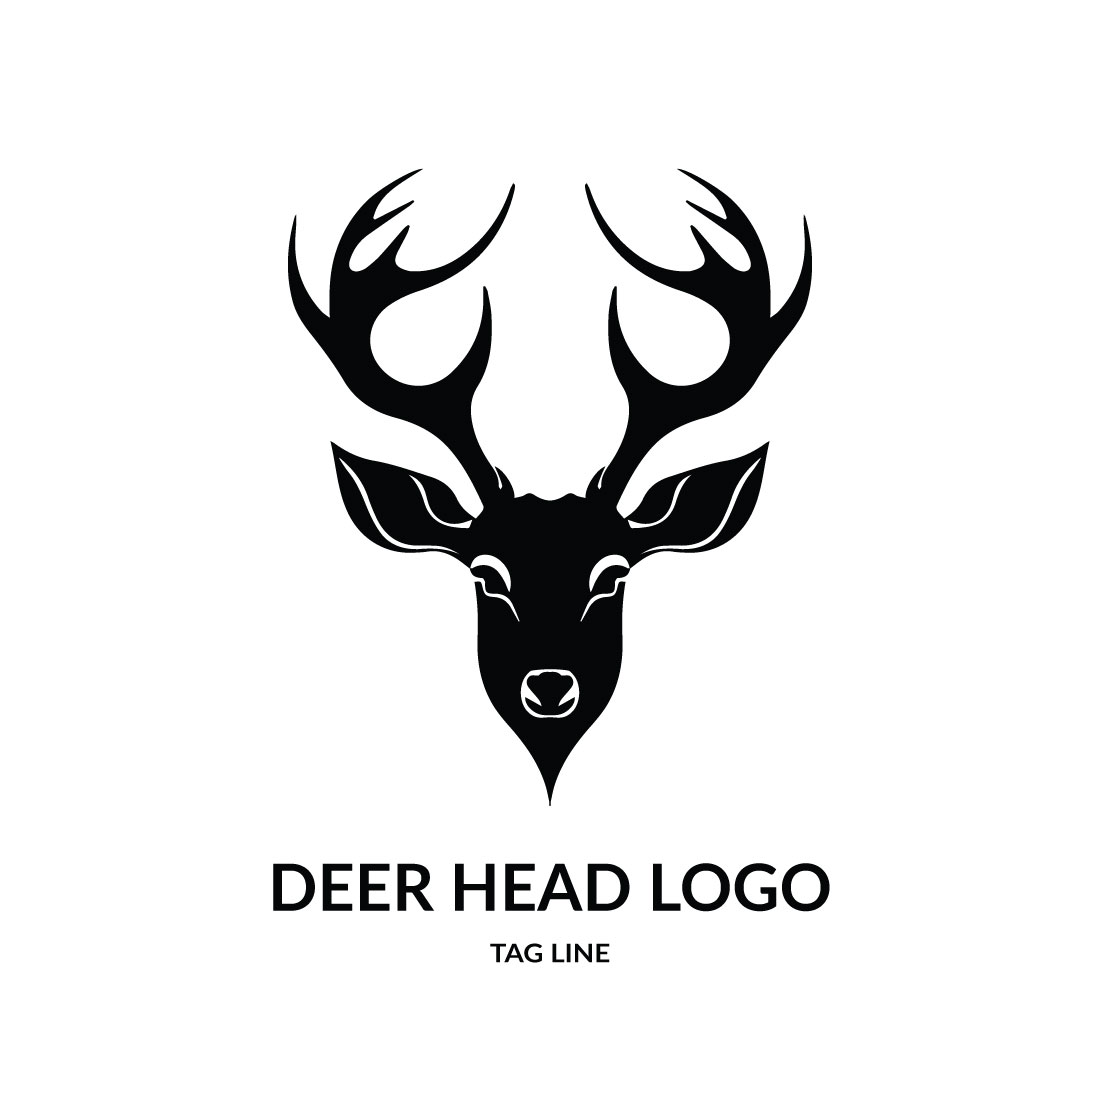 Deer Head Logo Template preview image.